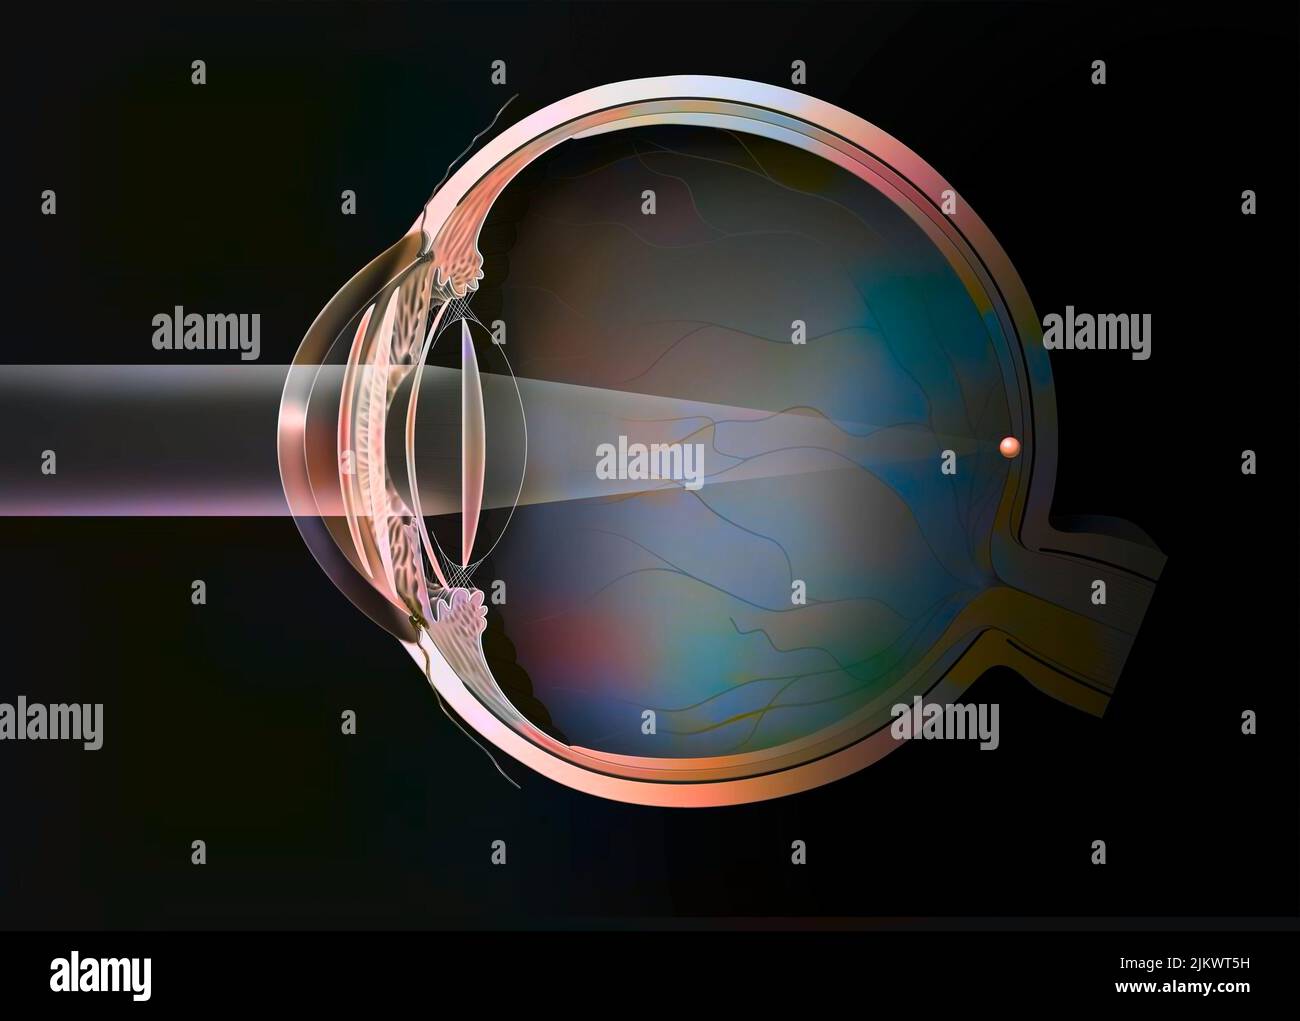 Lente intraocular fáquica fotografías e imágenes de alta resolución - Alamy